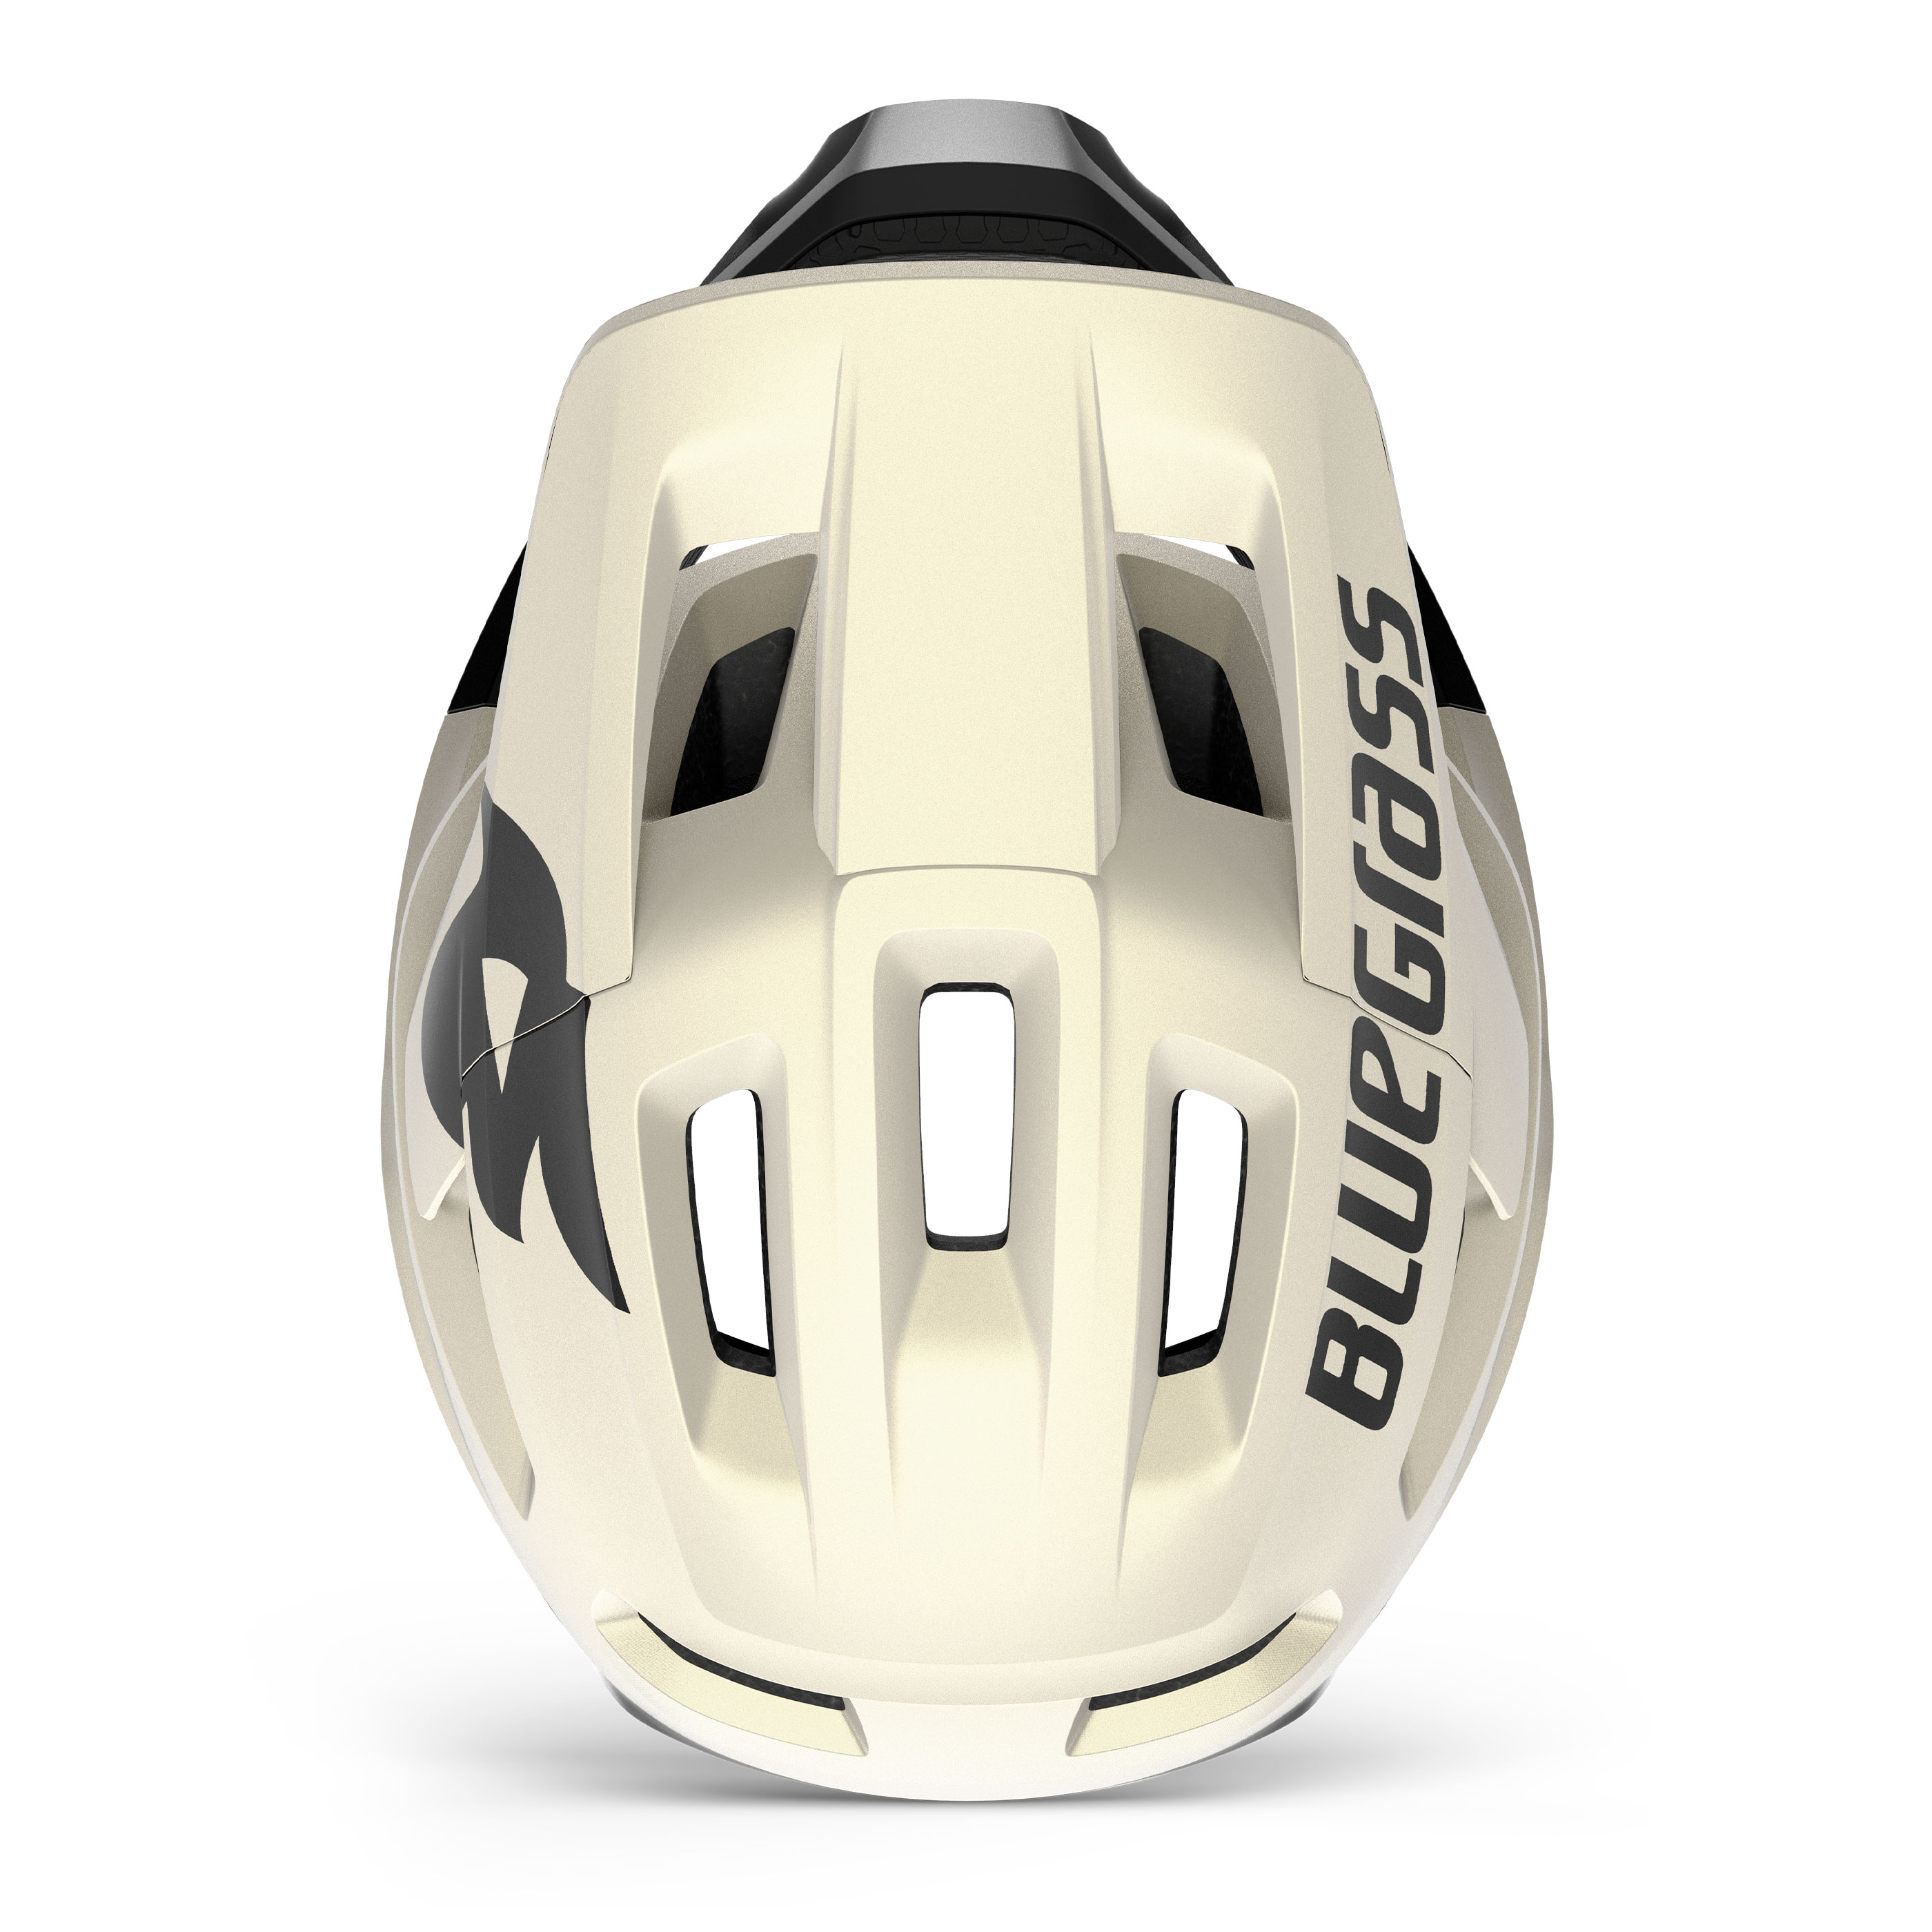 bluegrass-vanguard-core-mtb-helmet-G14BI1-top